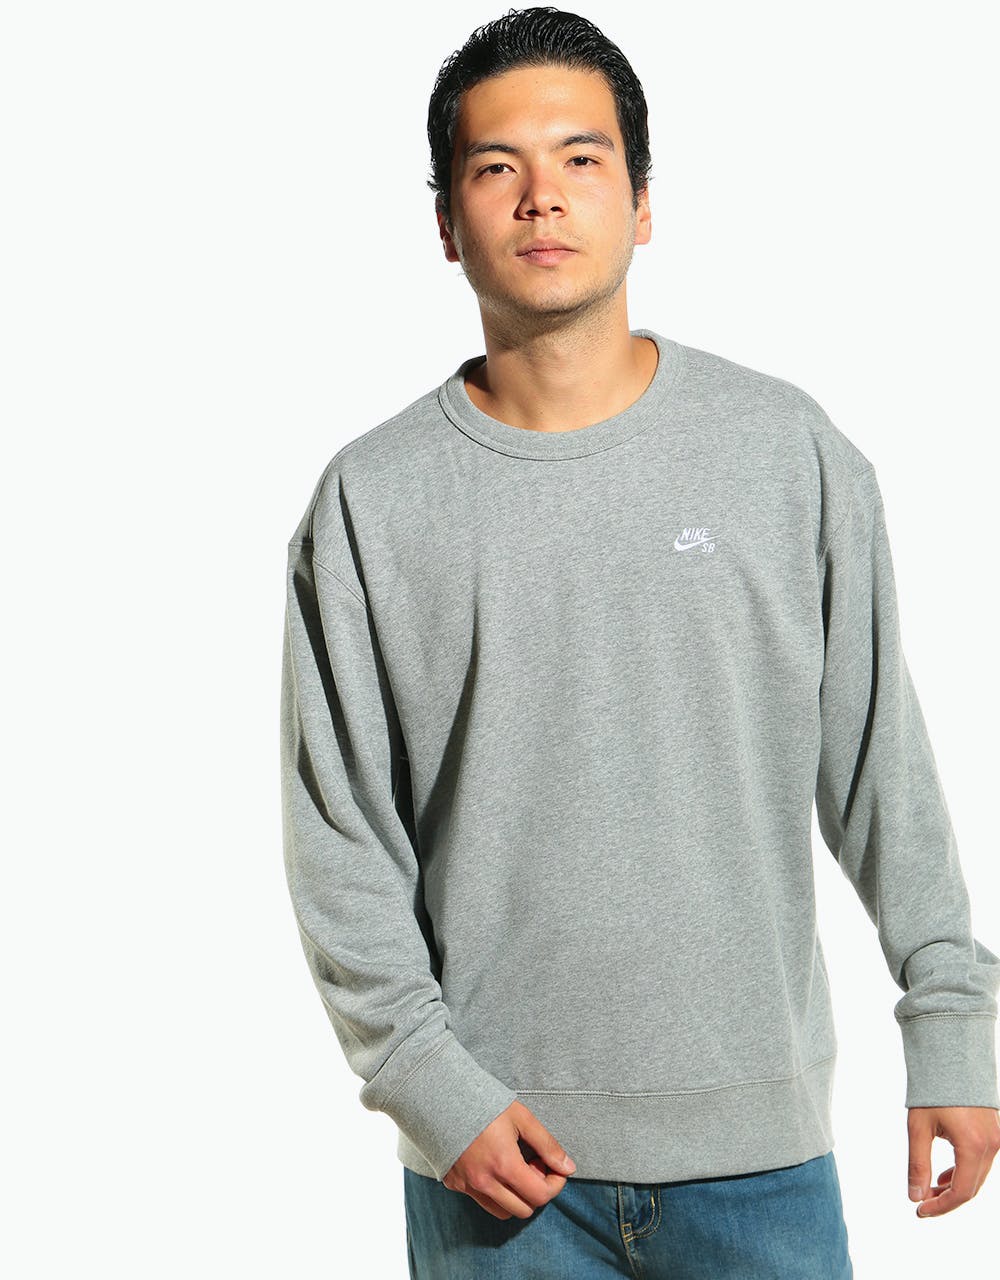 Nike SB Logo Crewneck Sweatshirt - Dk Grey Heather/White